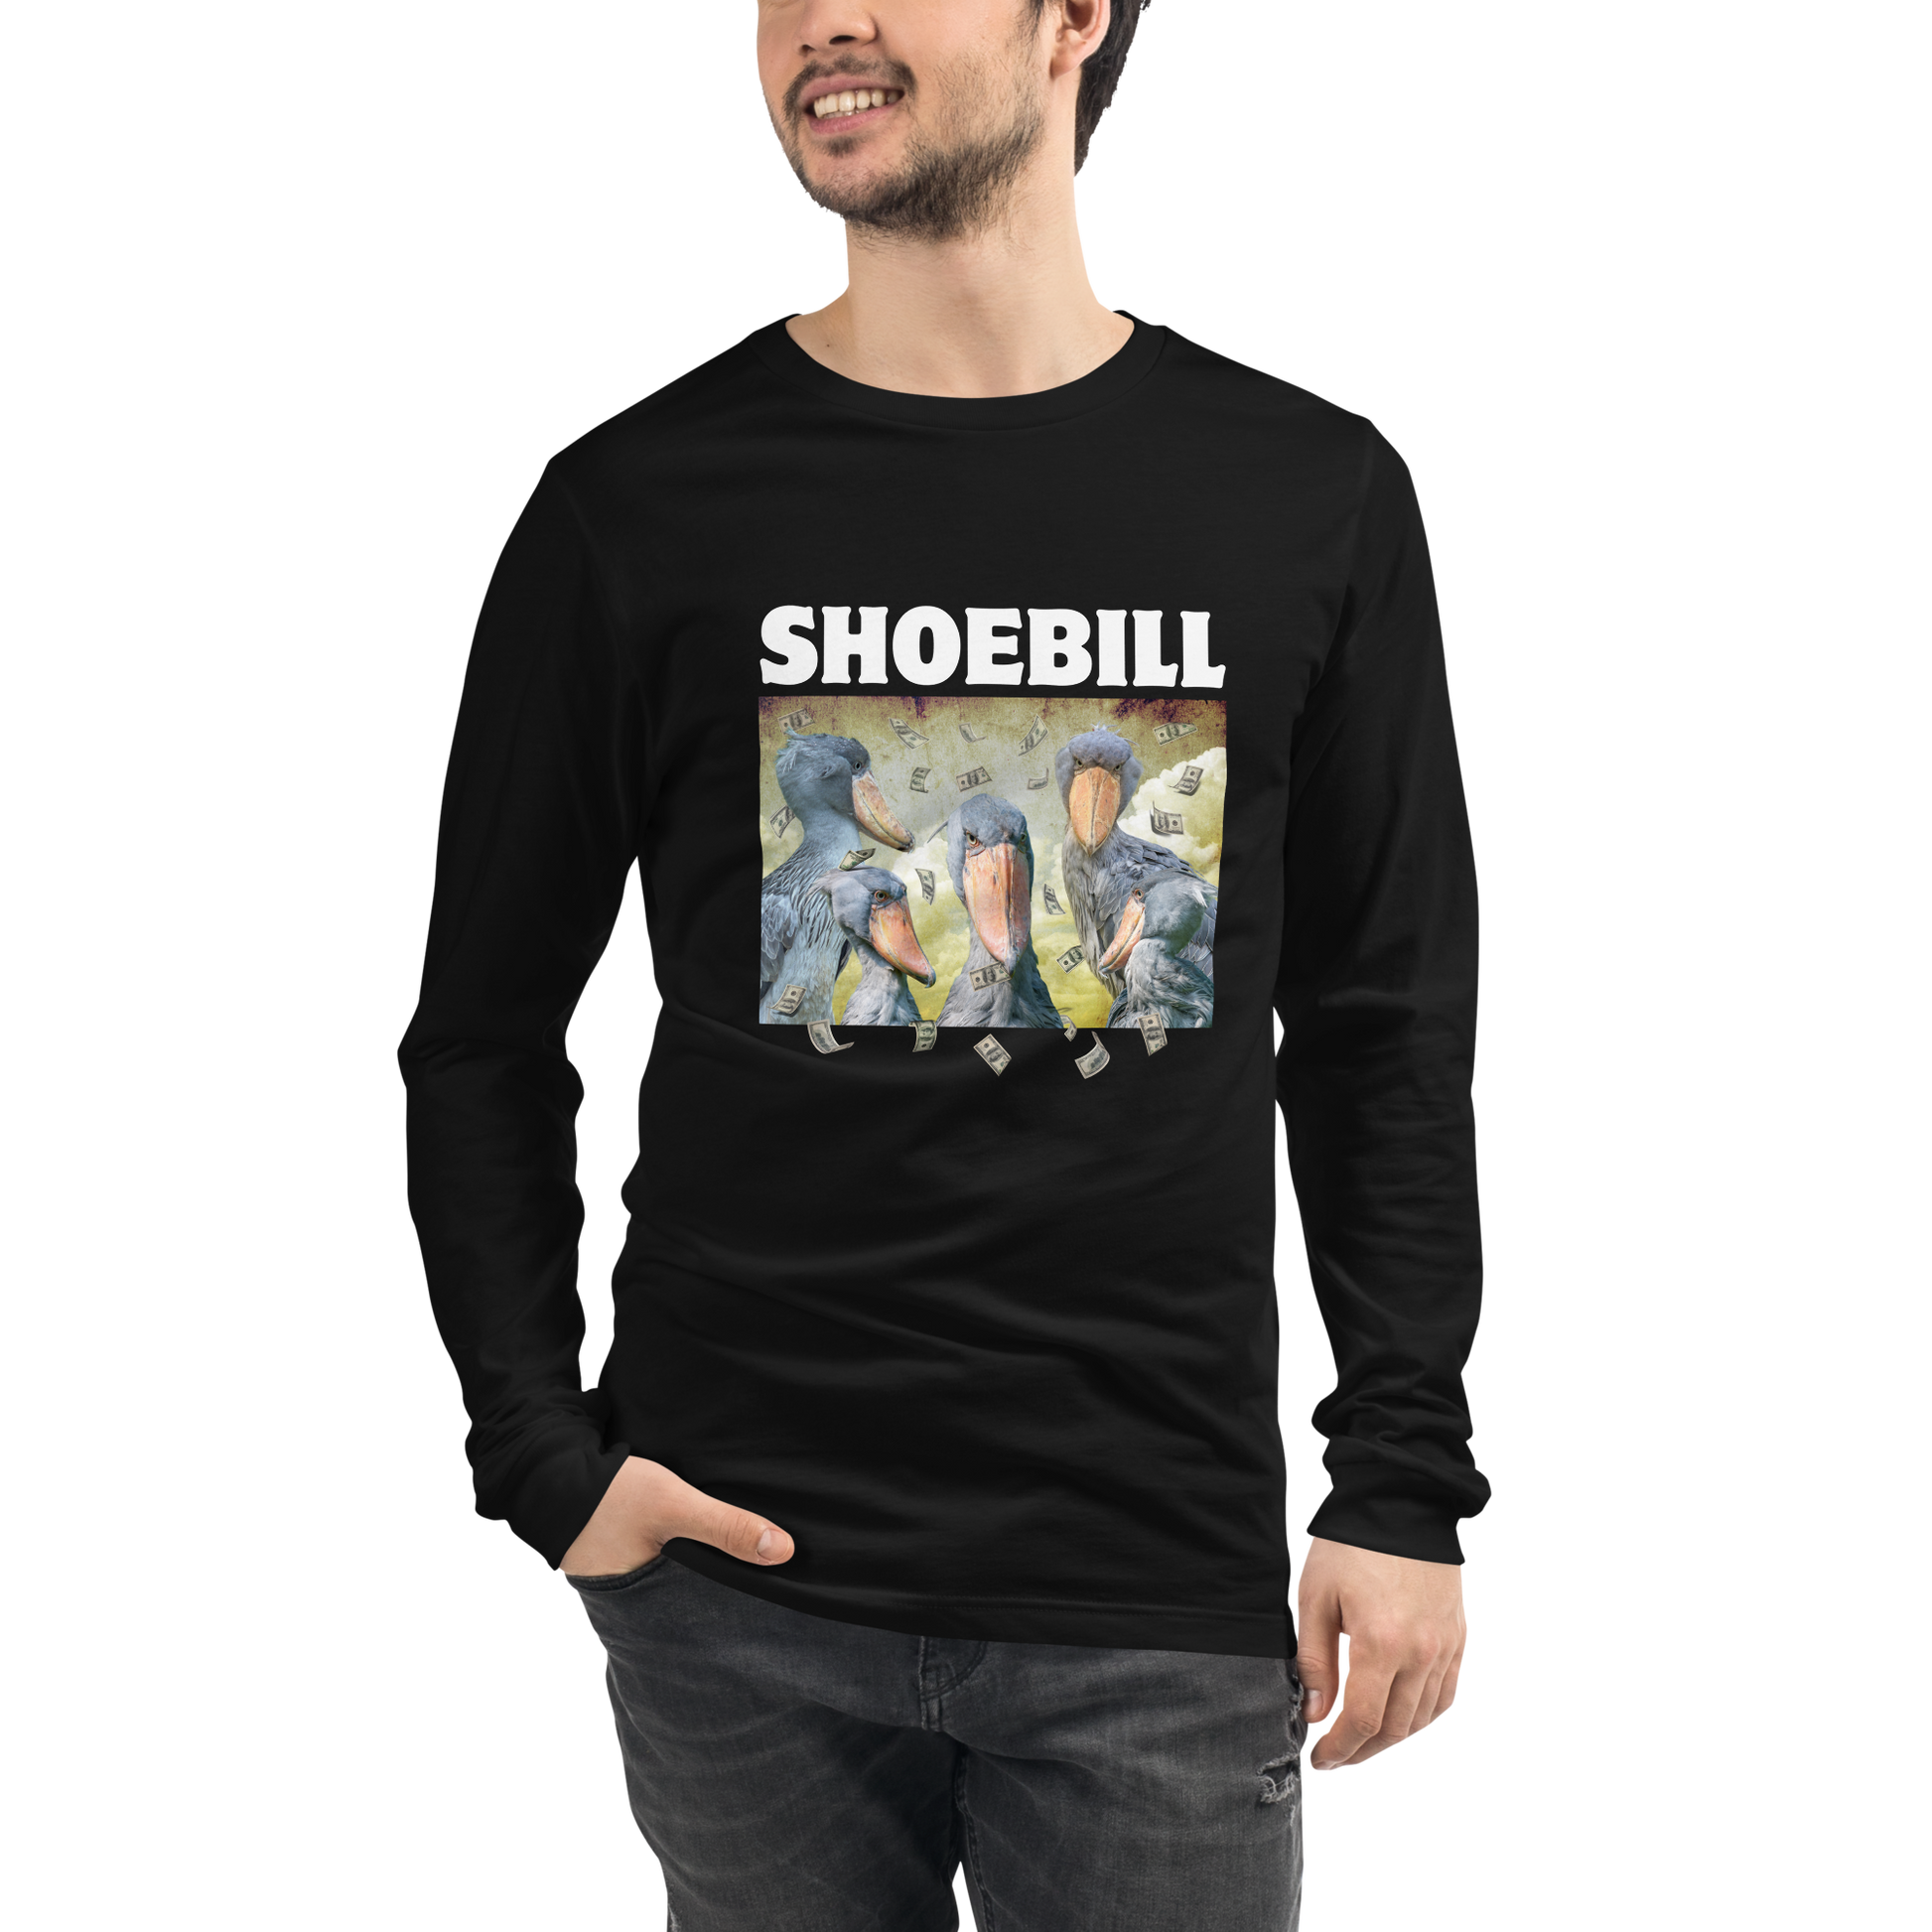 Man wearing a Black Shoebill Stork Long Sleeve Tee featuring cool Shoebill graphic on the chest - Artsy/Funny Shoebill Stork Long Sleeve Graphic Tees - Boozy Fox